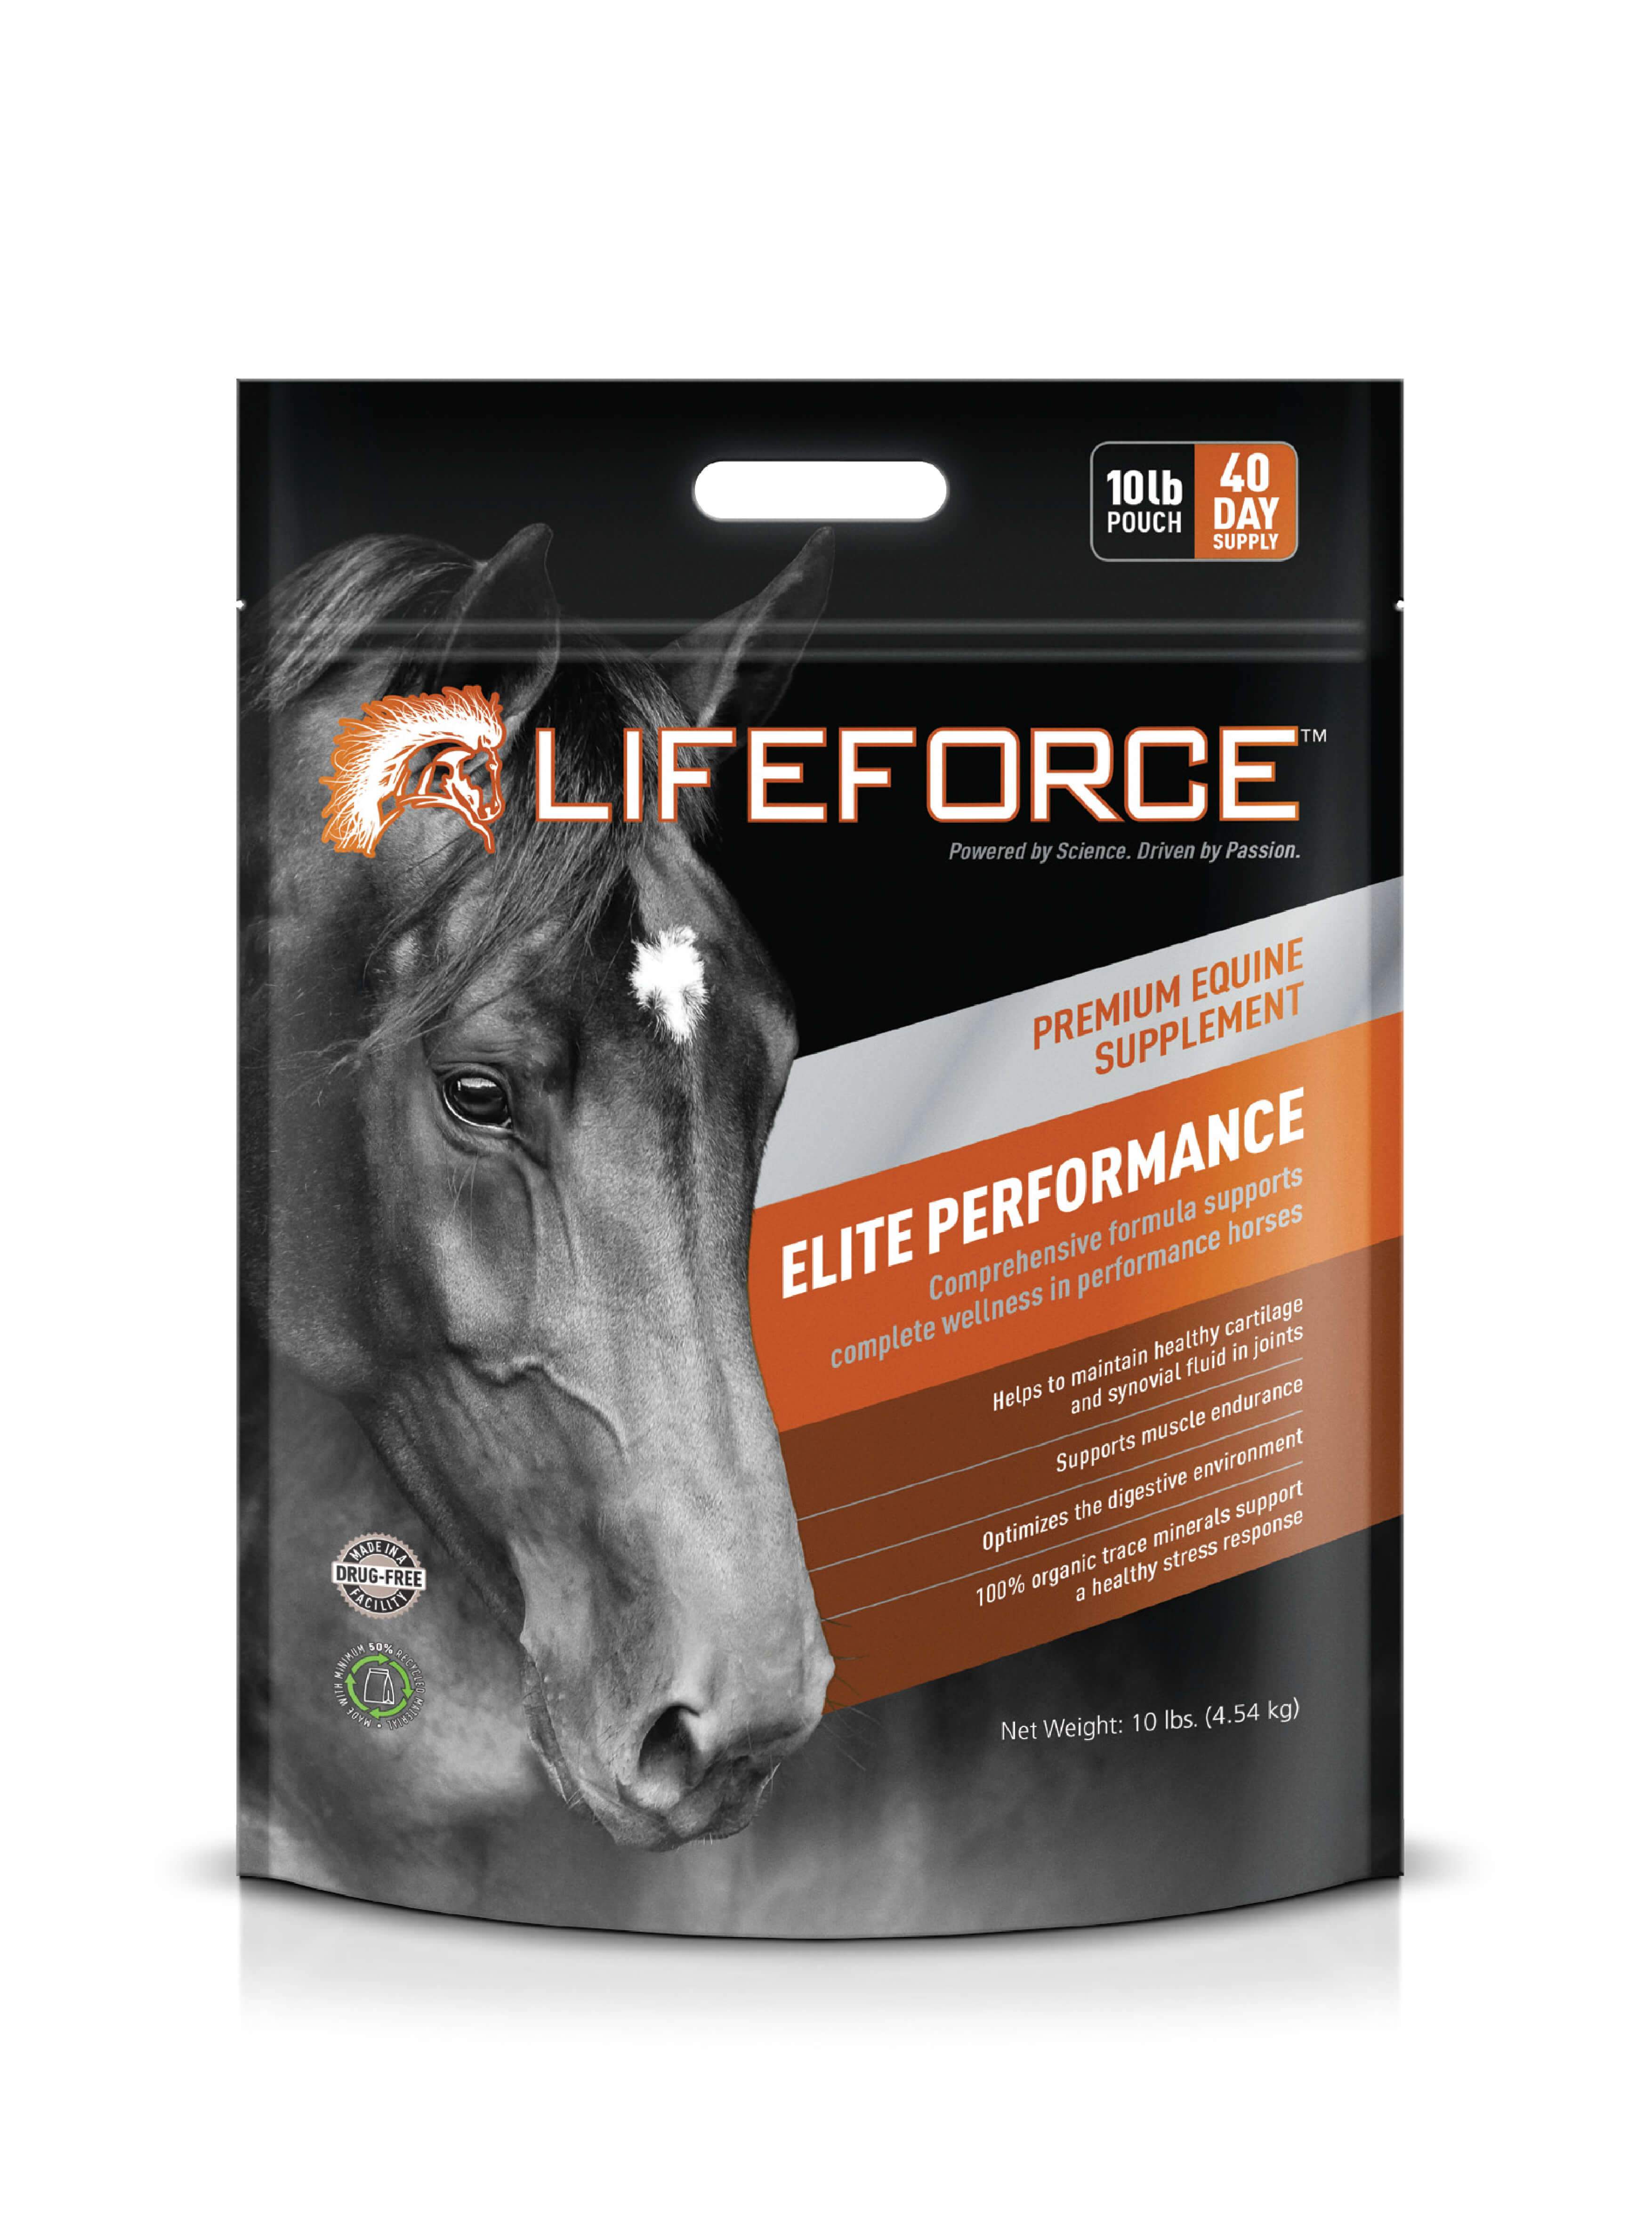 Lifeforce Elite Performance pouch image